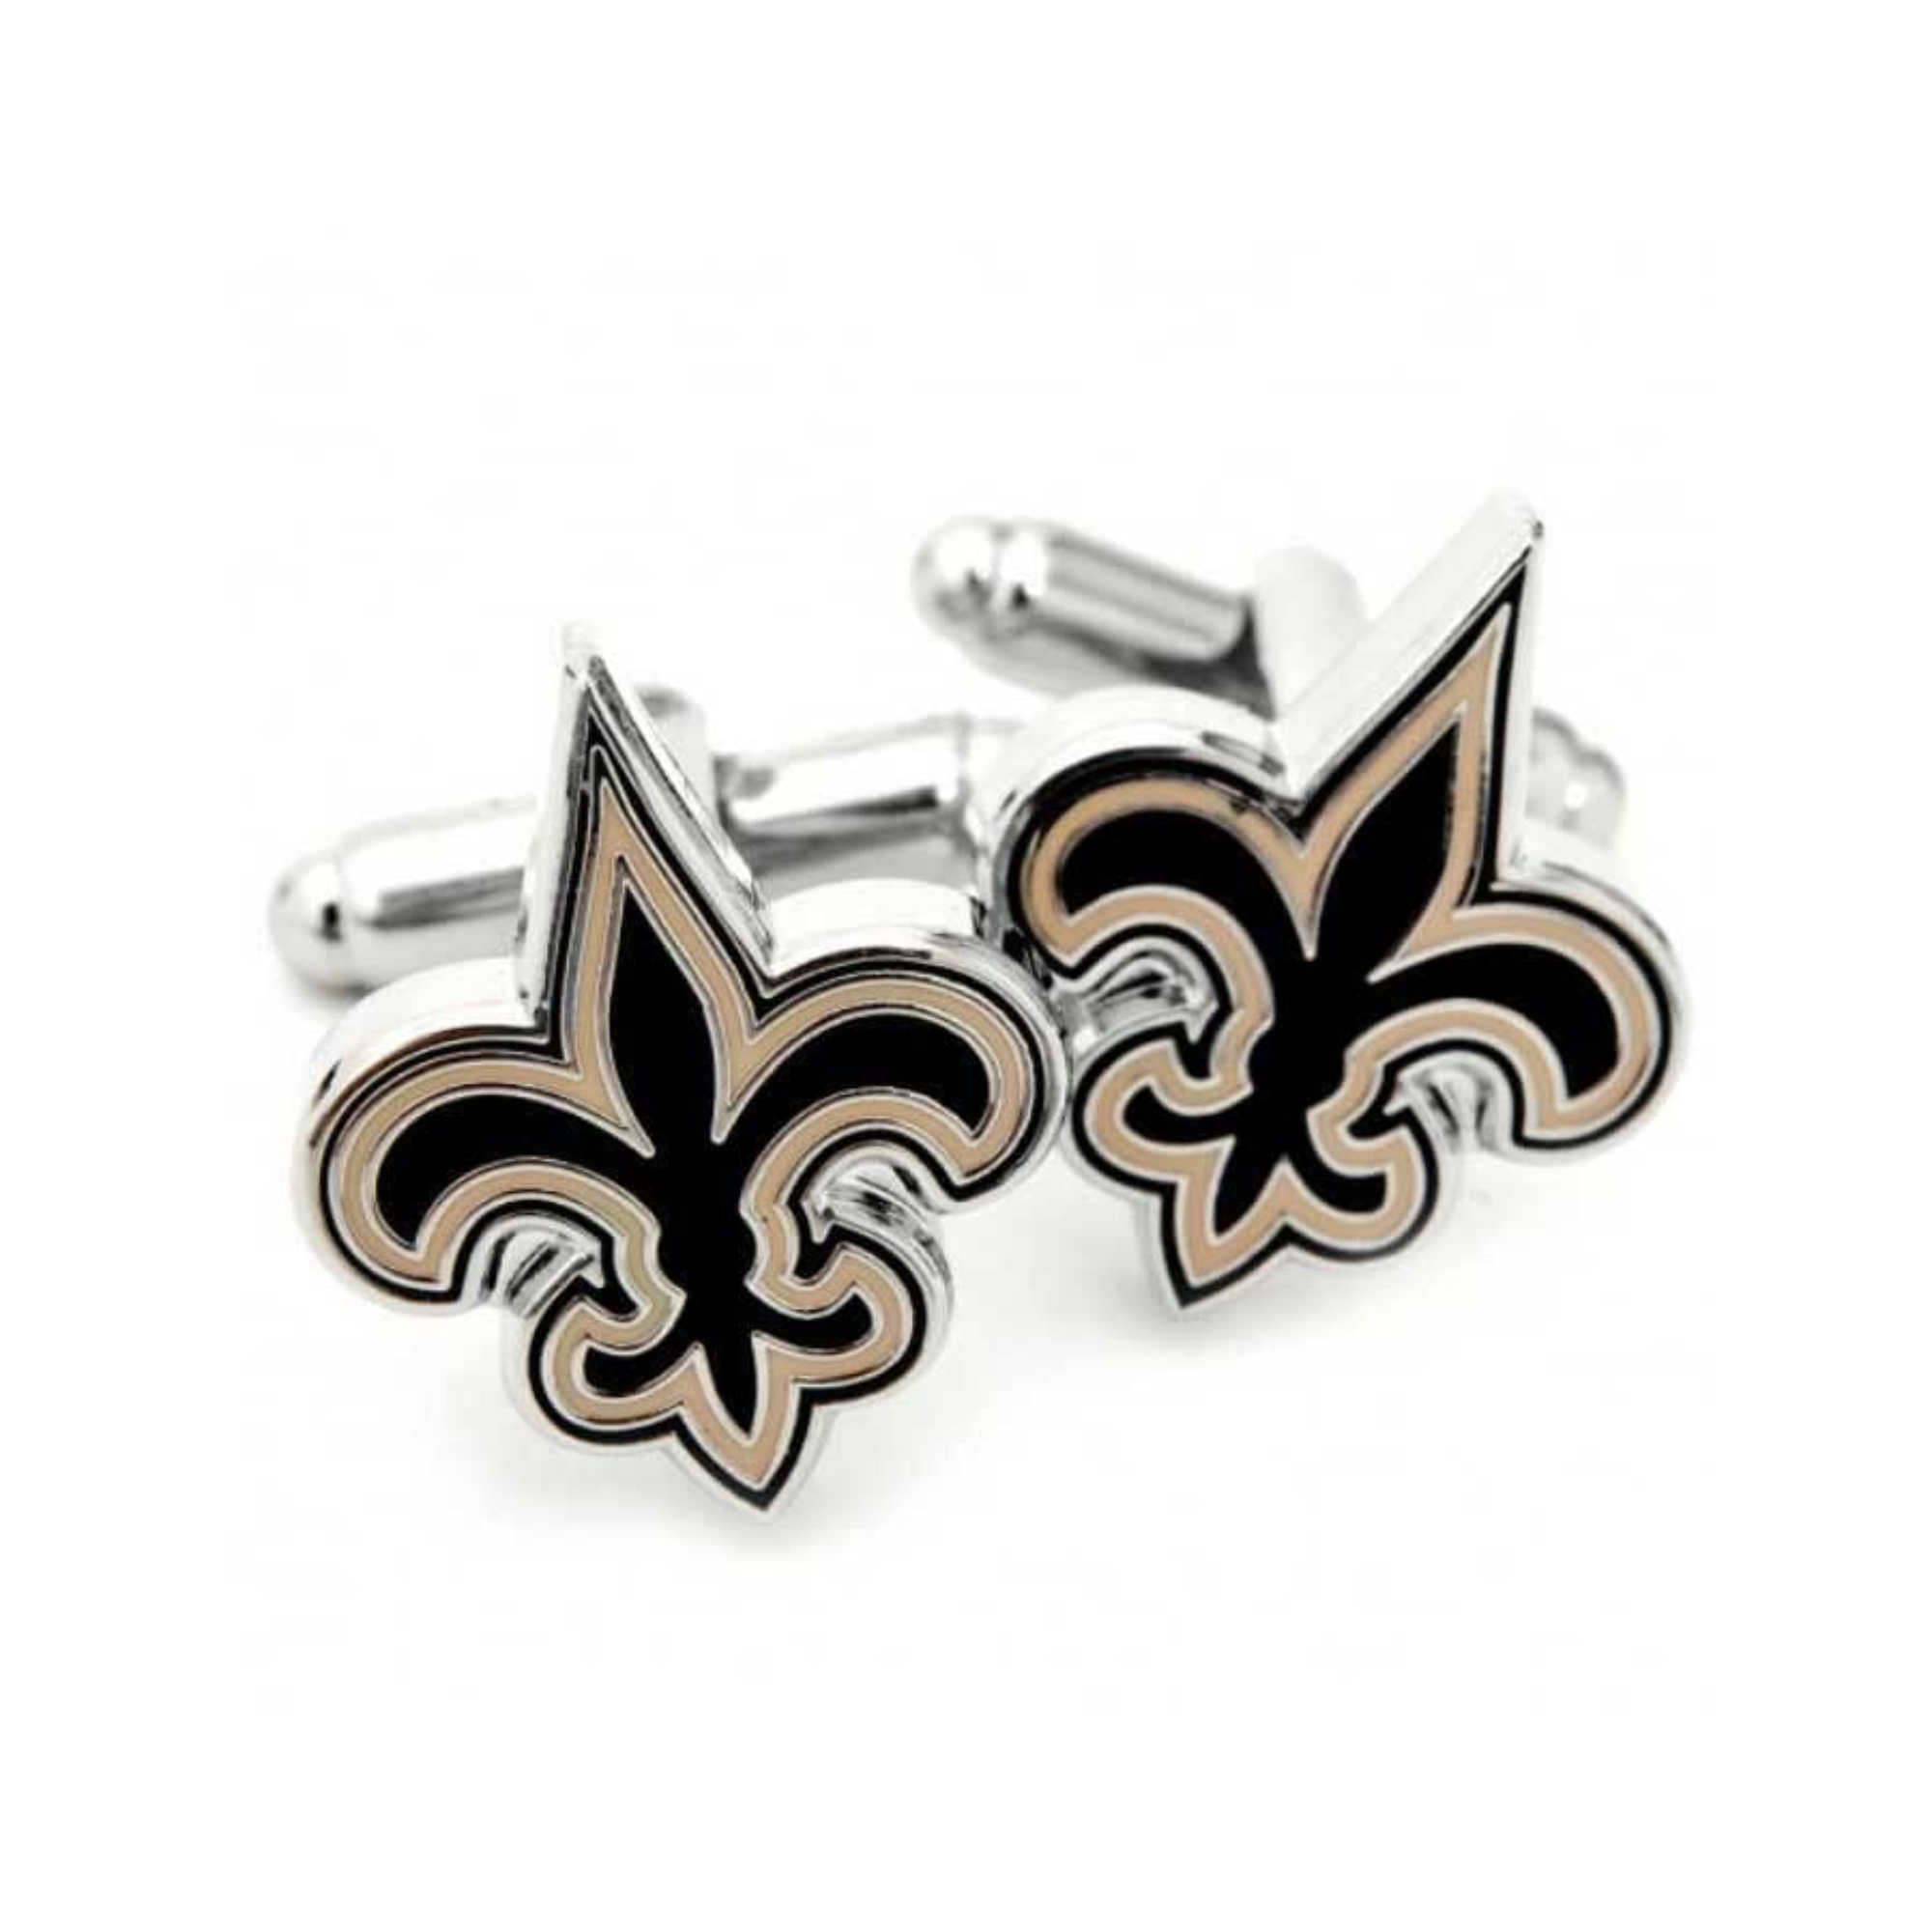 New Orleans Saints Cufflinks